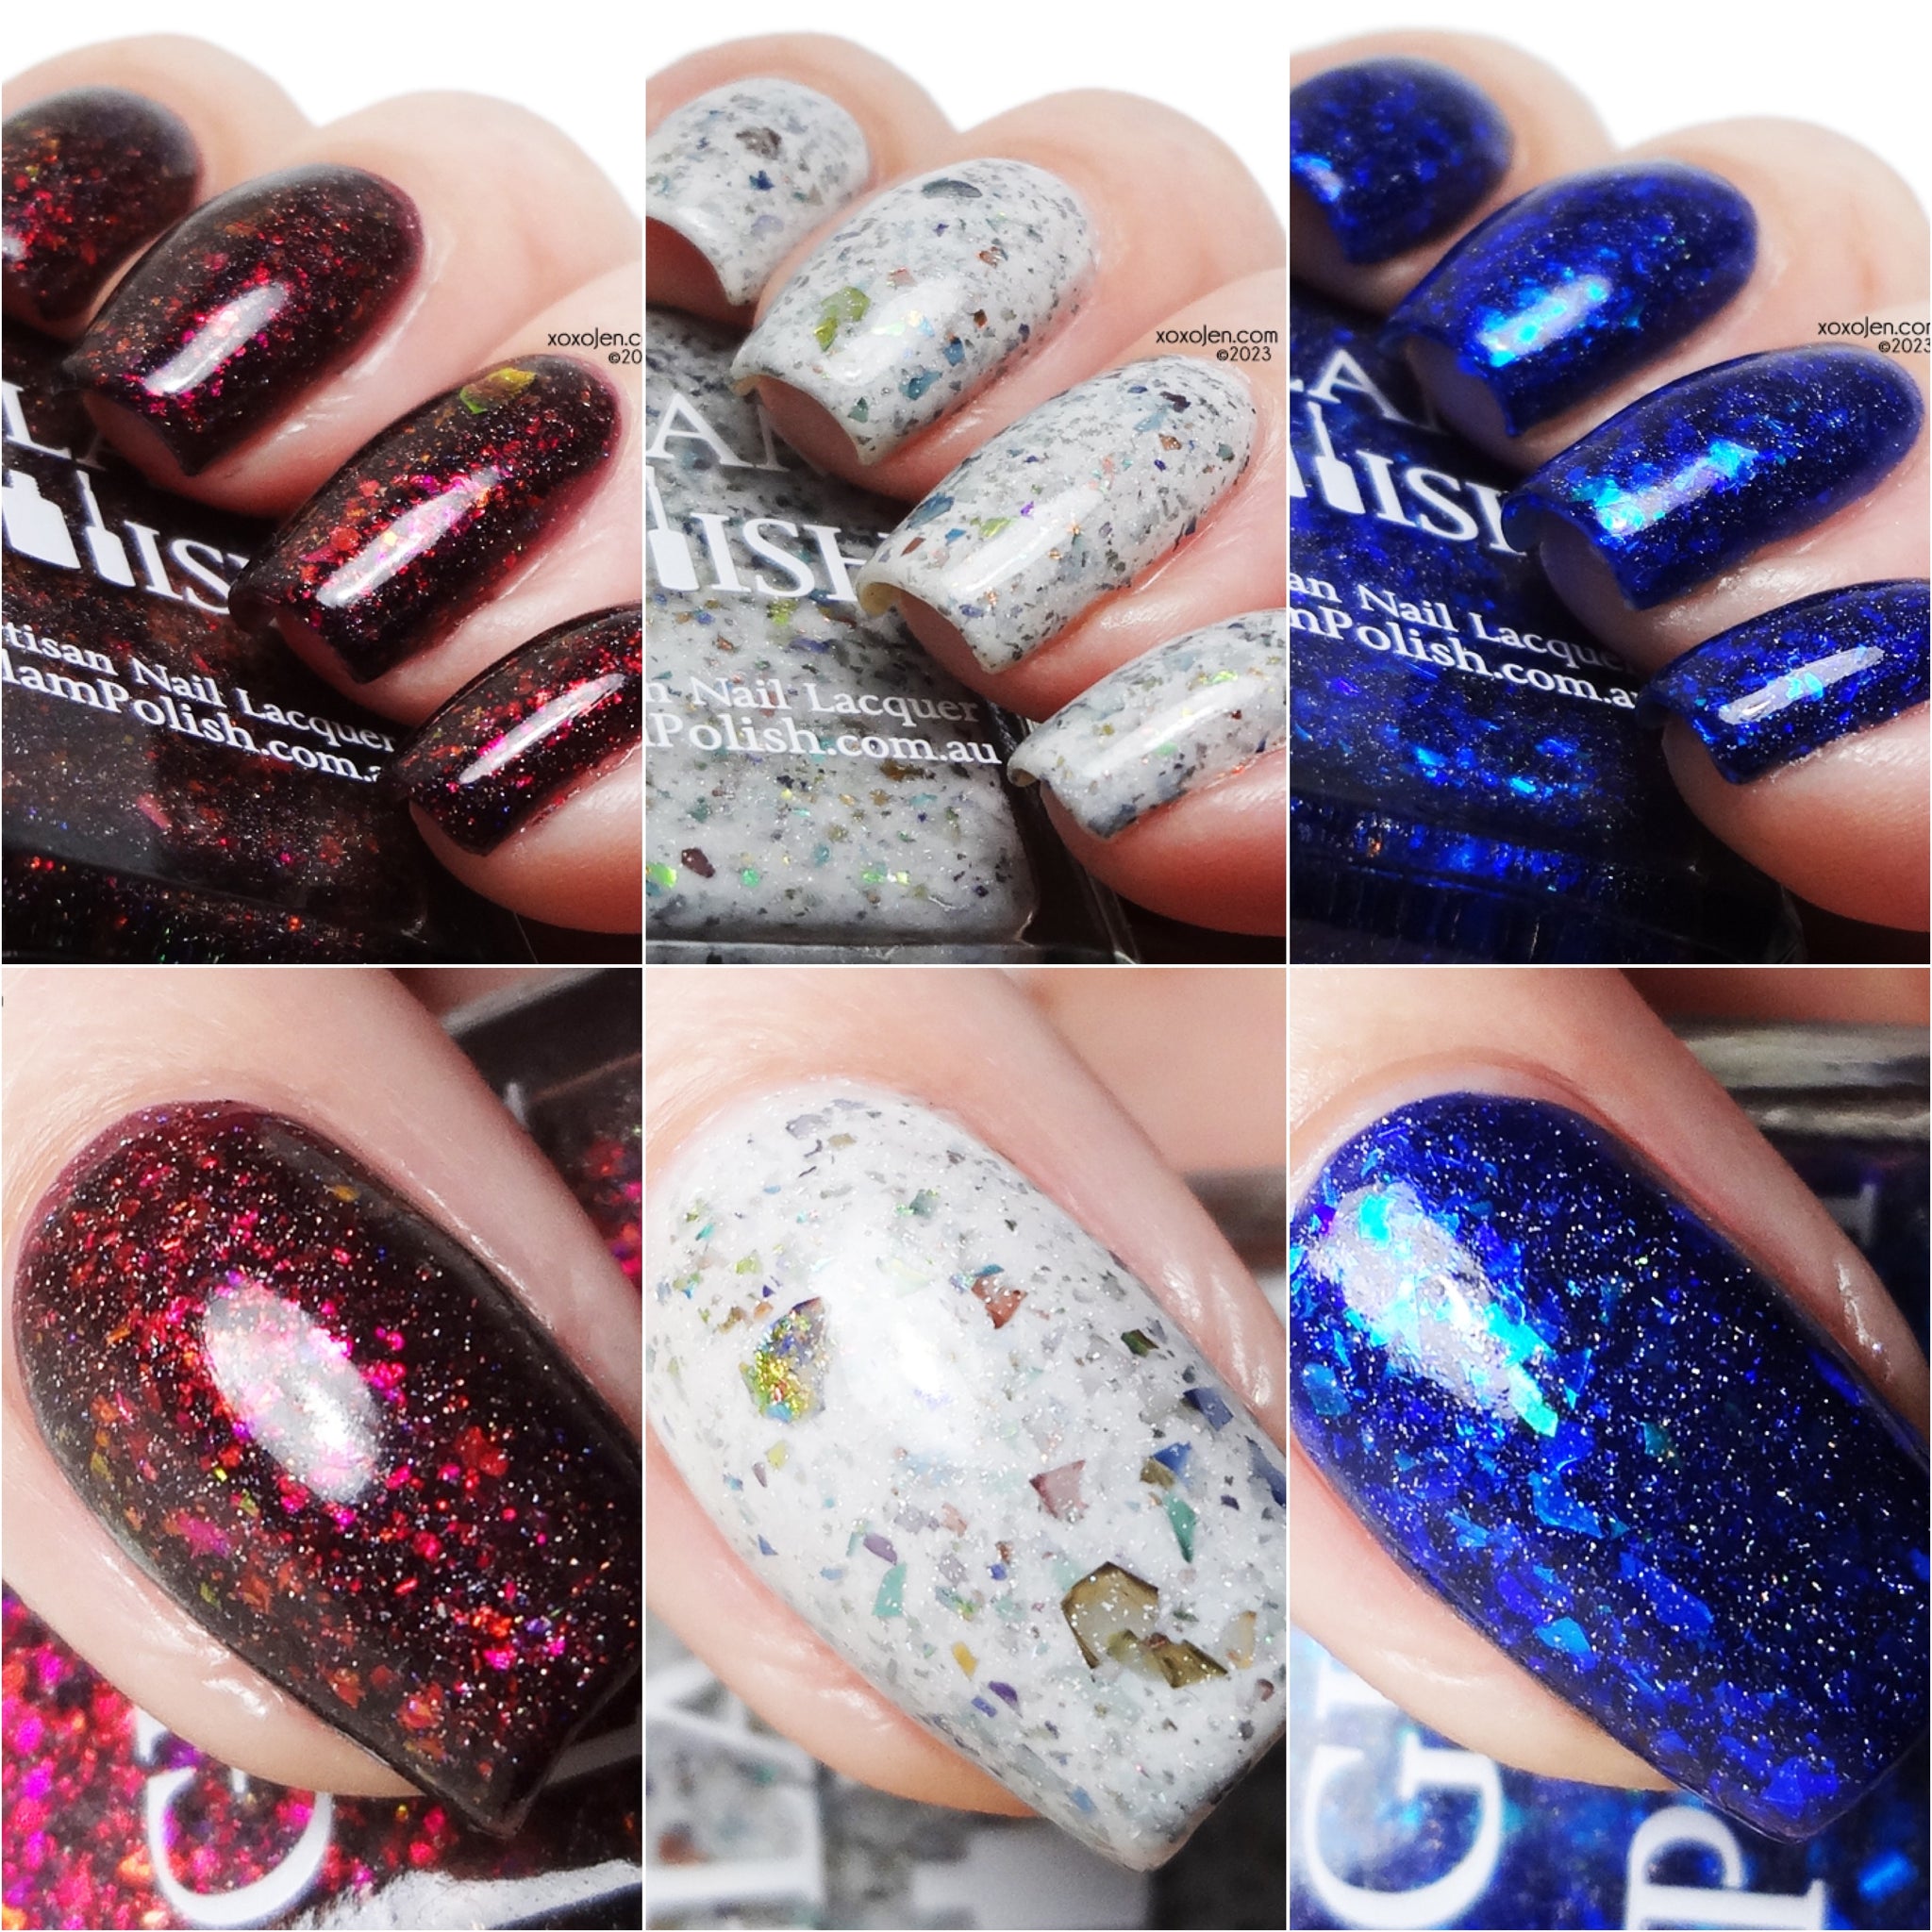 Blue glitter nails | Blue nail polish, Nails, Dark blue nail polish